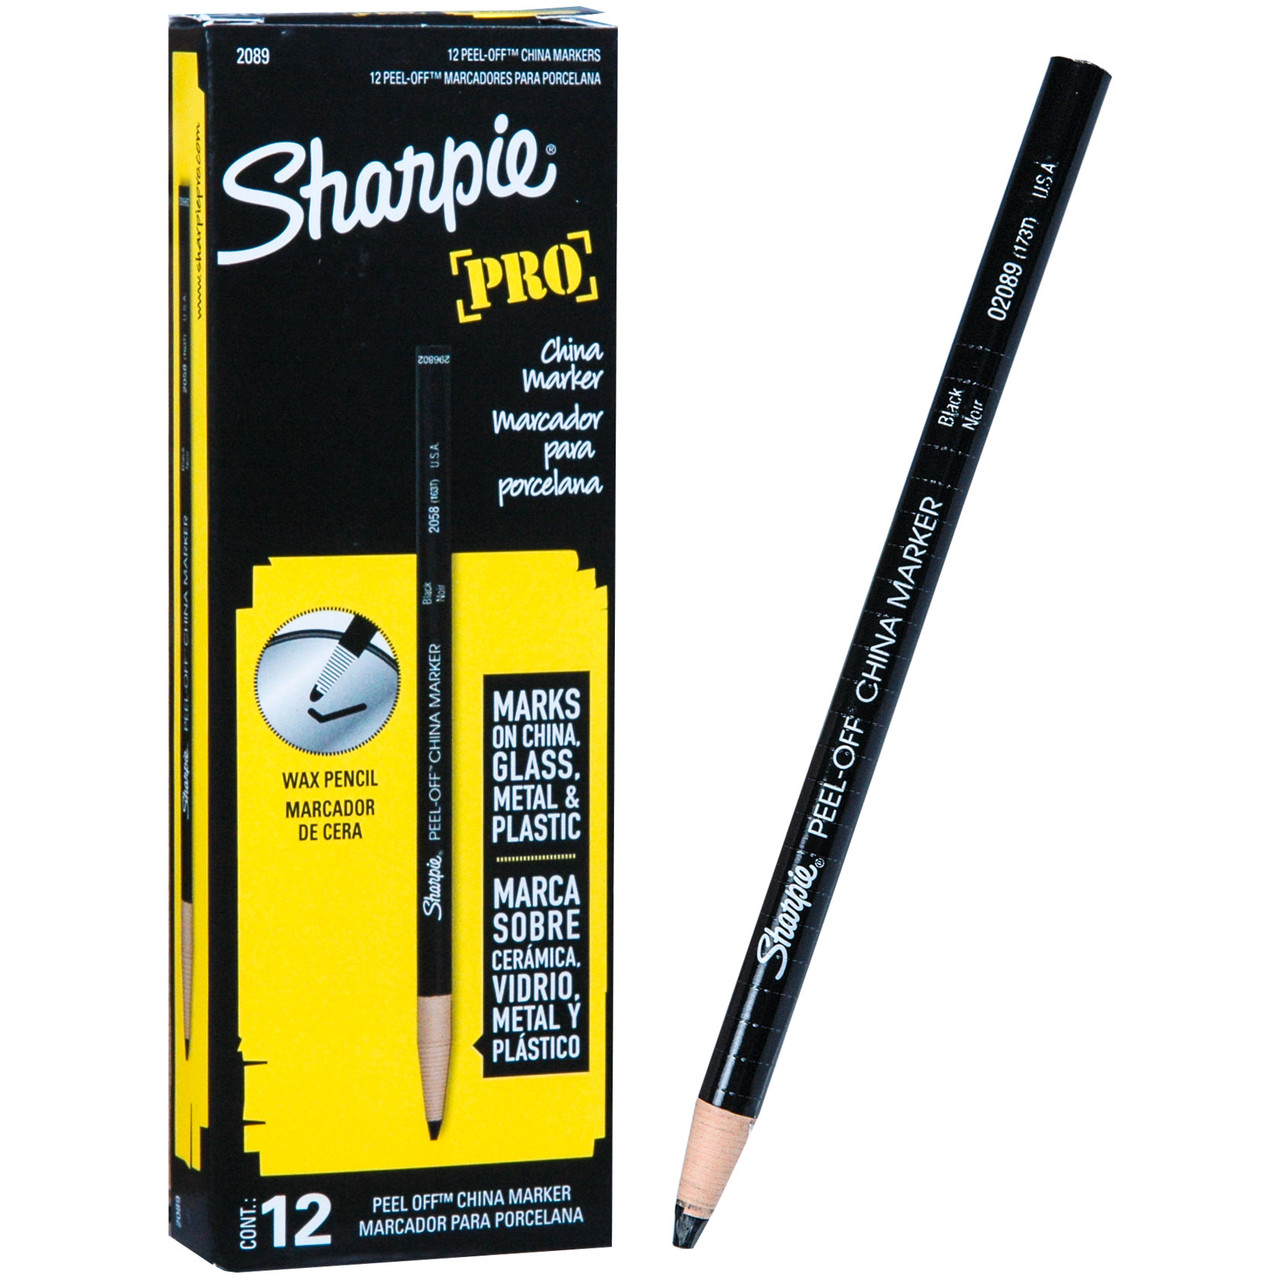 Sharpie Black Peel Off China Marker, 02089 173T, Box of 12